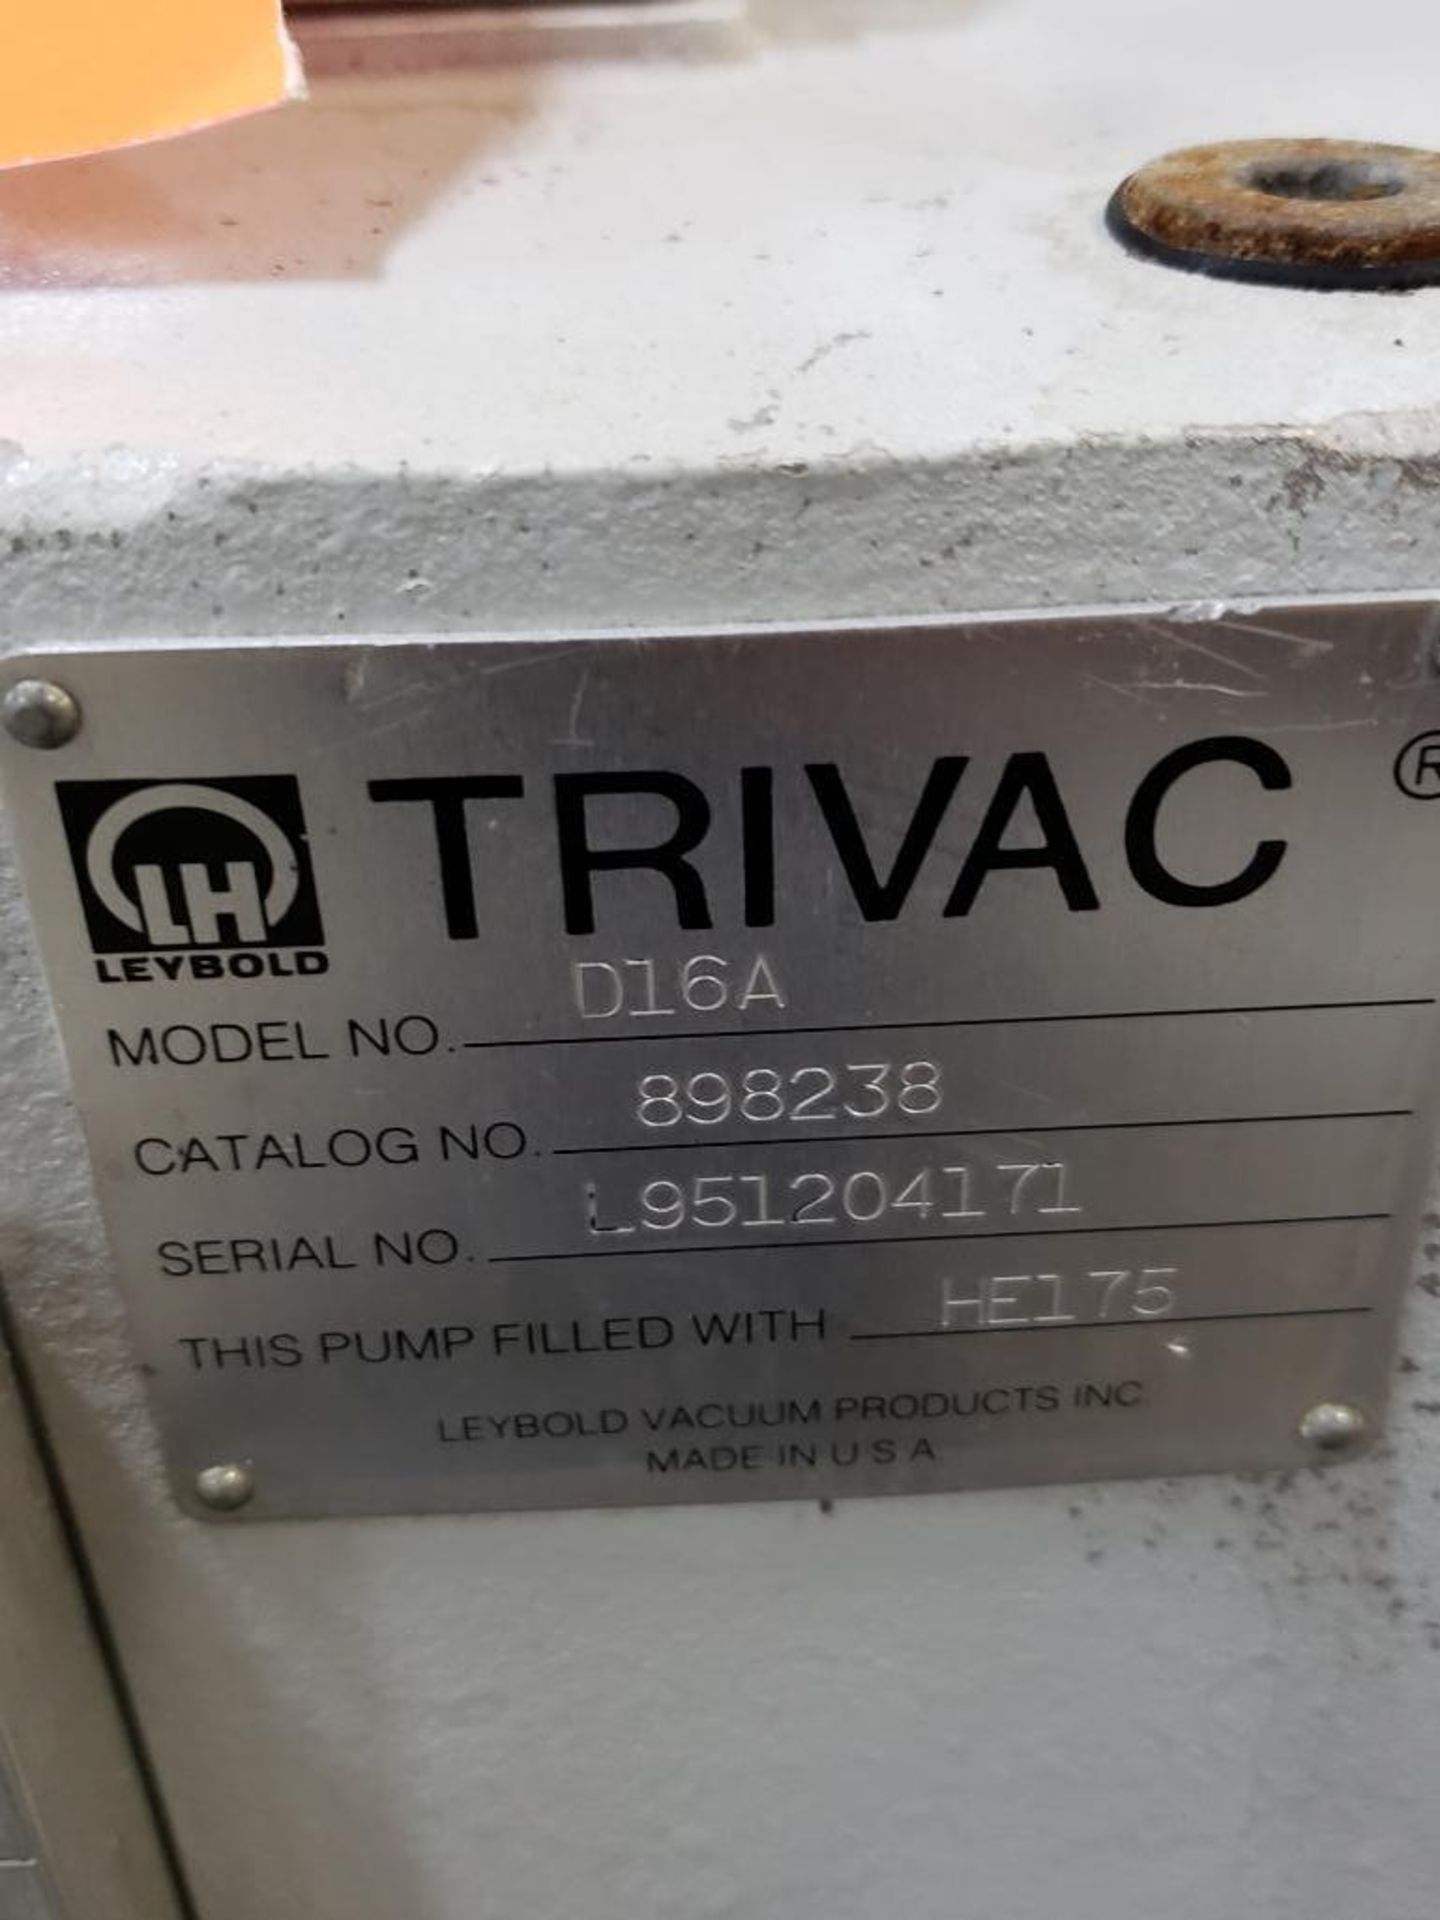 Leybold TriVac model D16A vacuum pump. - Image 2 of 3